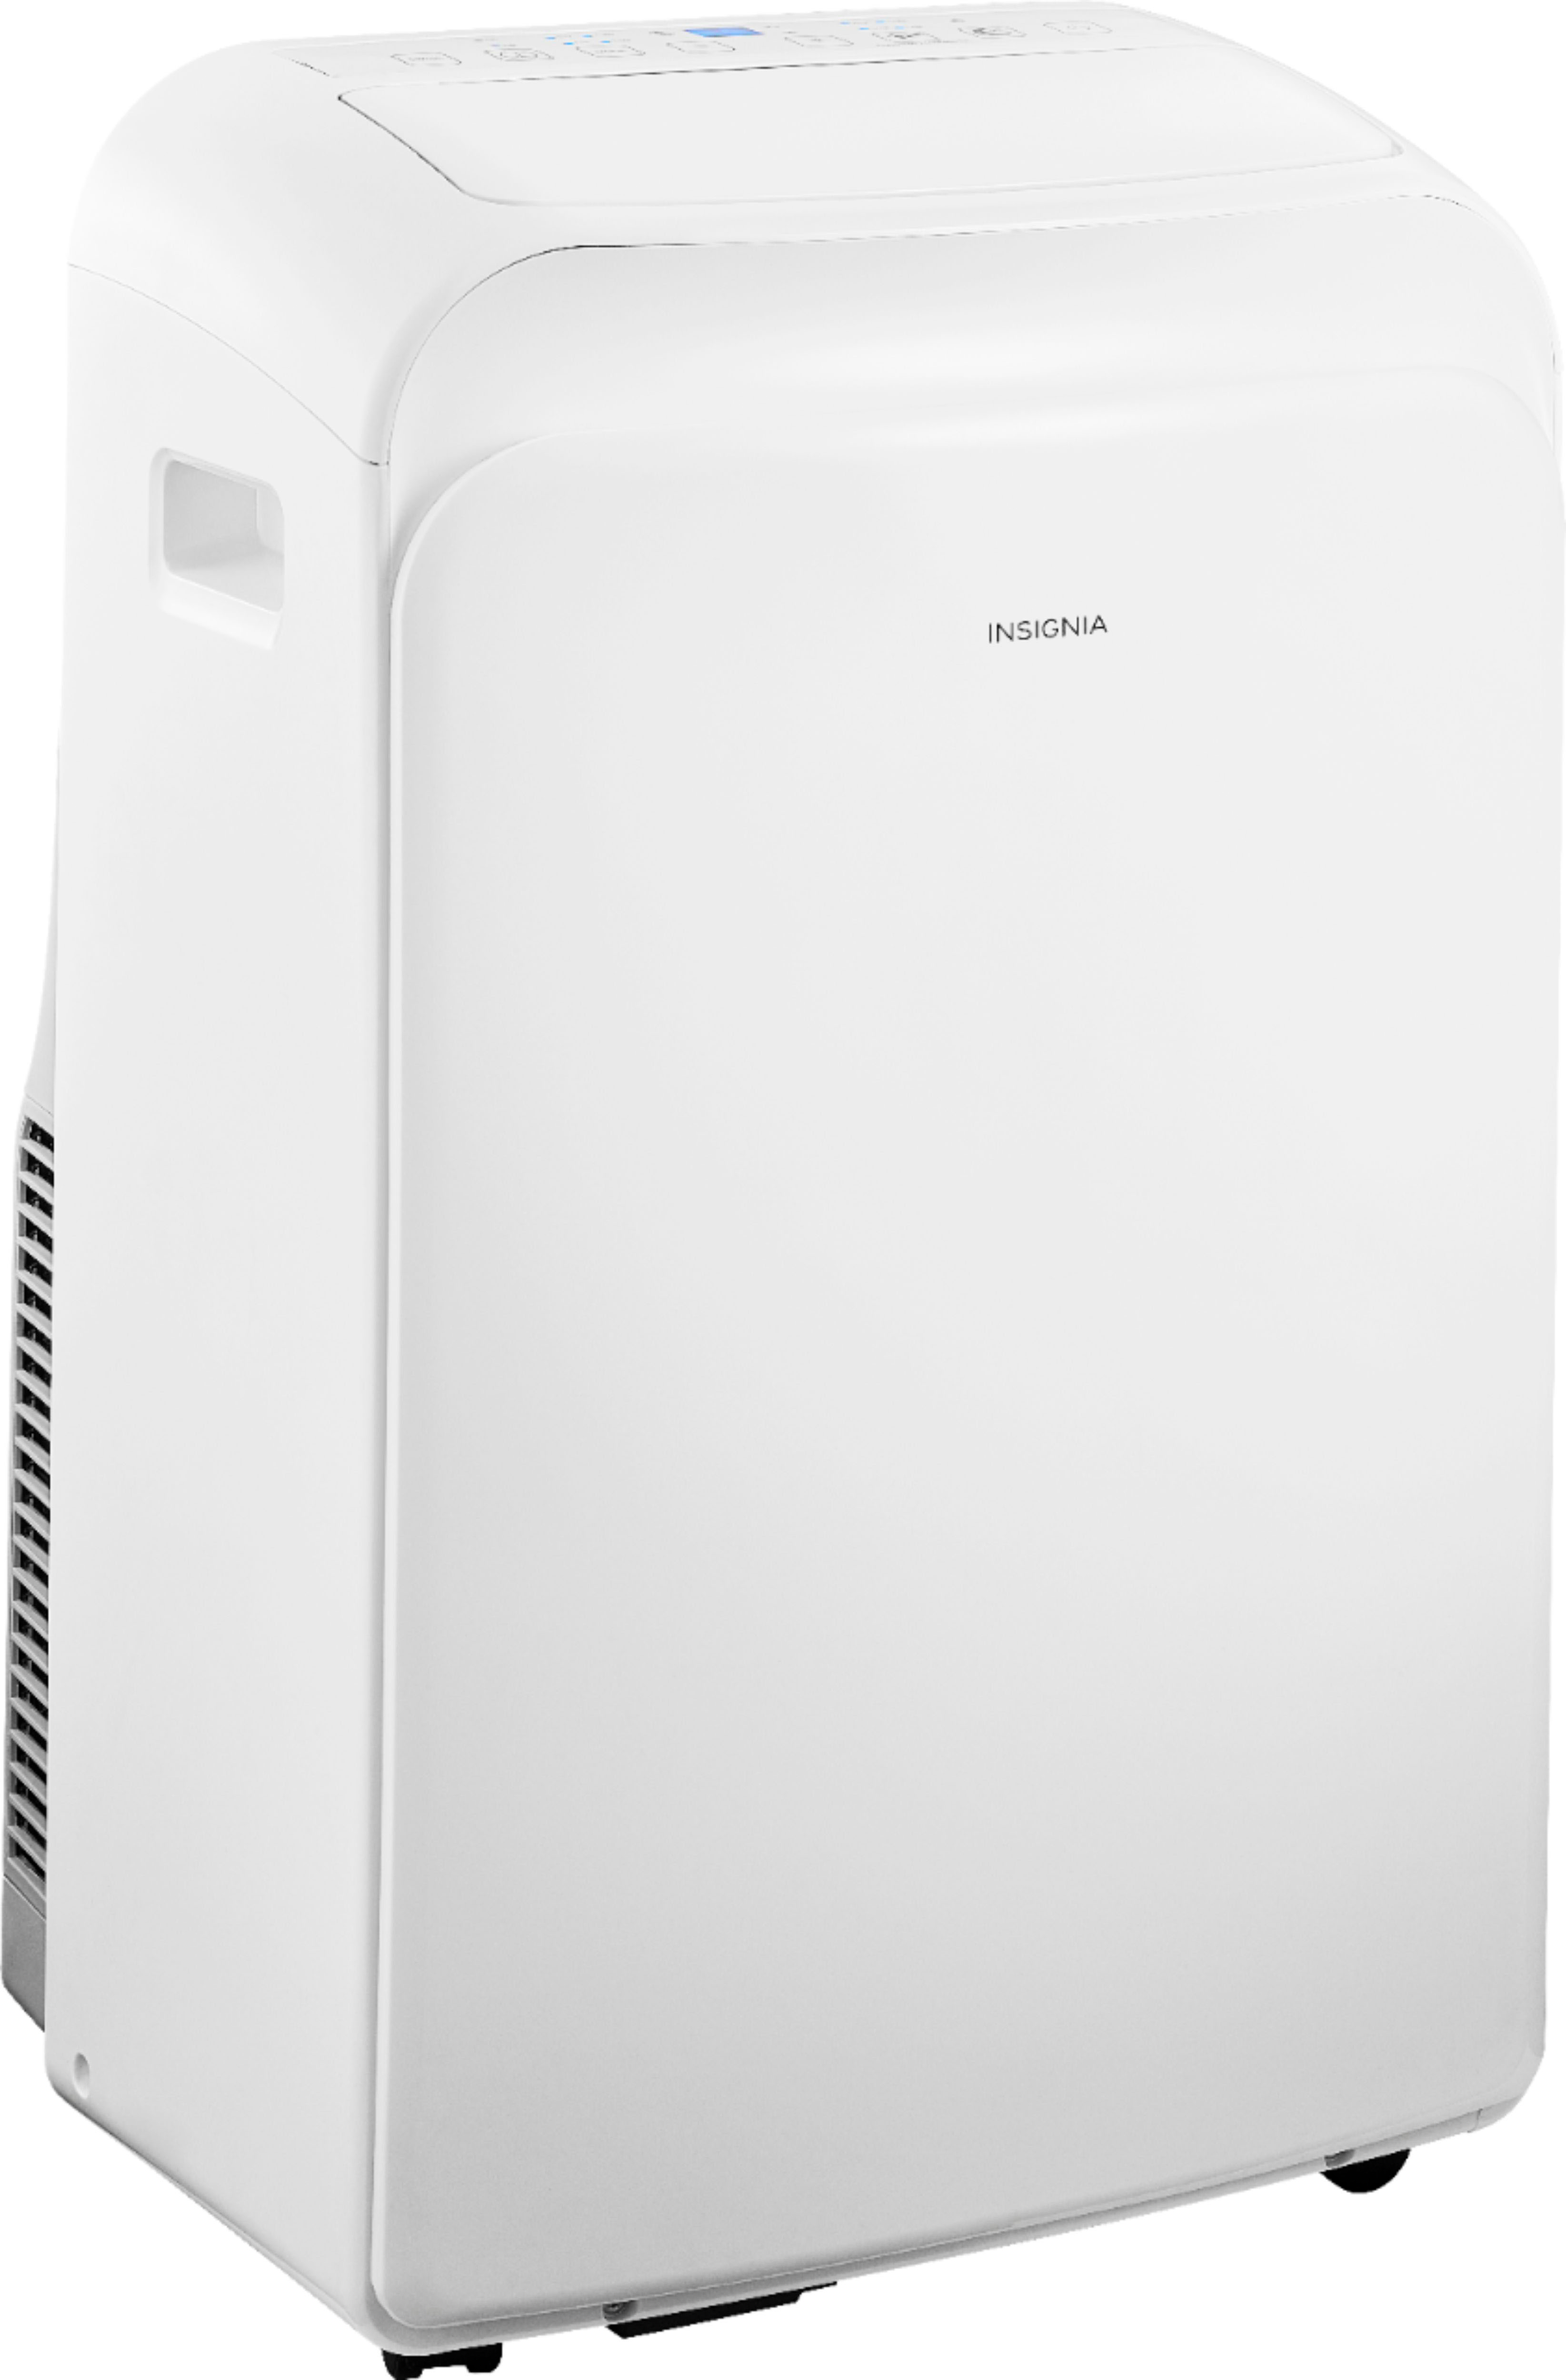 Angle View: Insignia™ - 350 Sq. Ft. Portable Air Conditioner - White